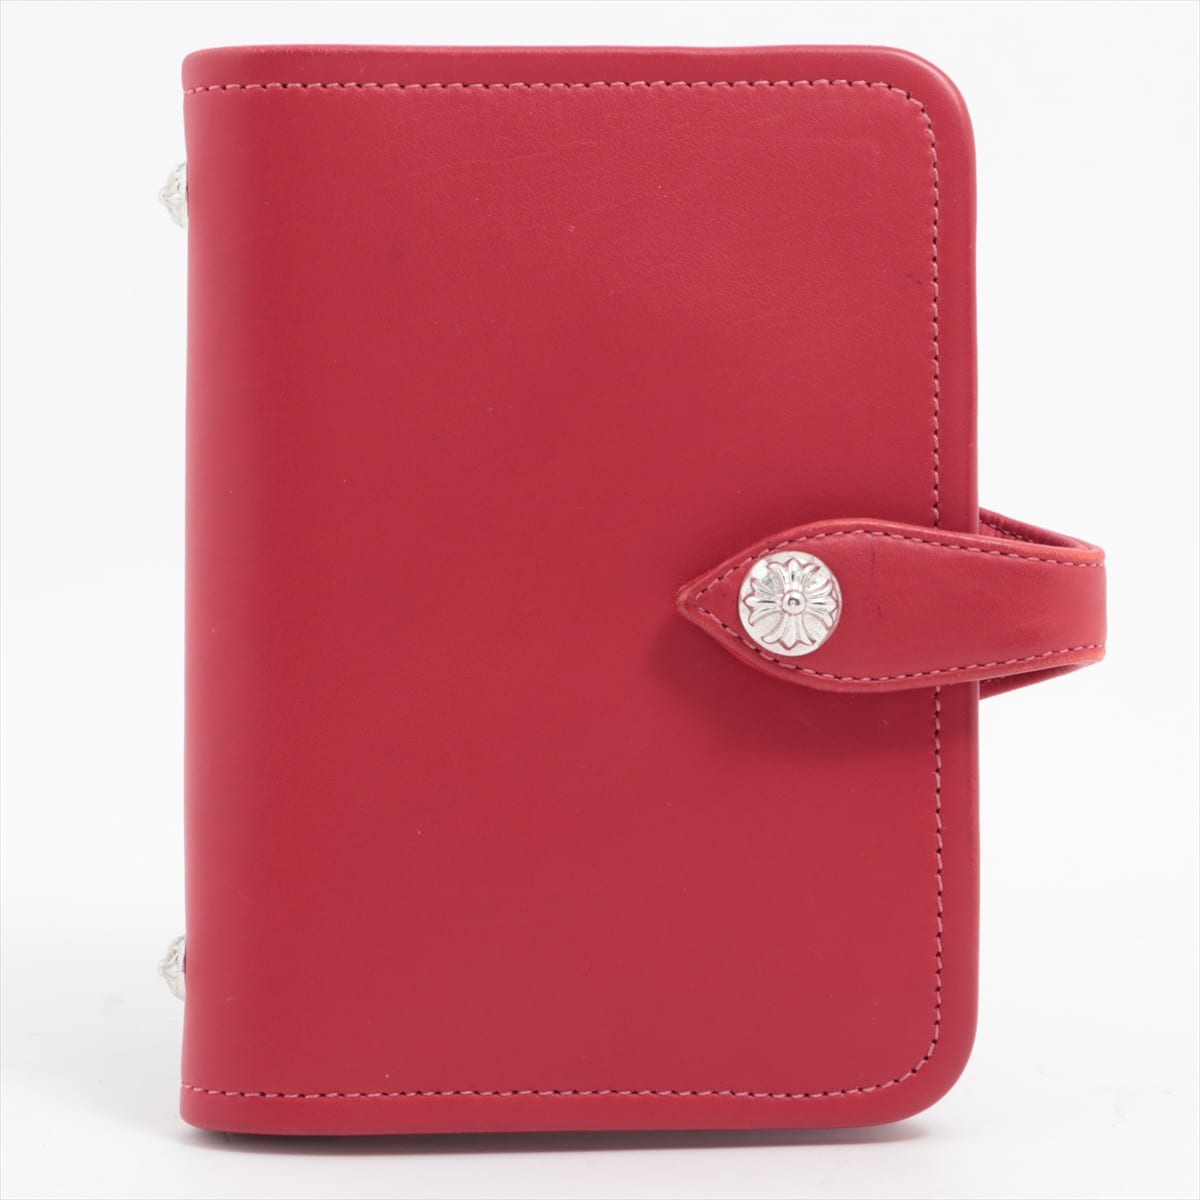 Chrome Hearts Agenda Mini Plain Notebook cover Leather With invoice